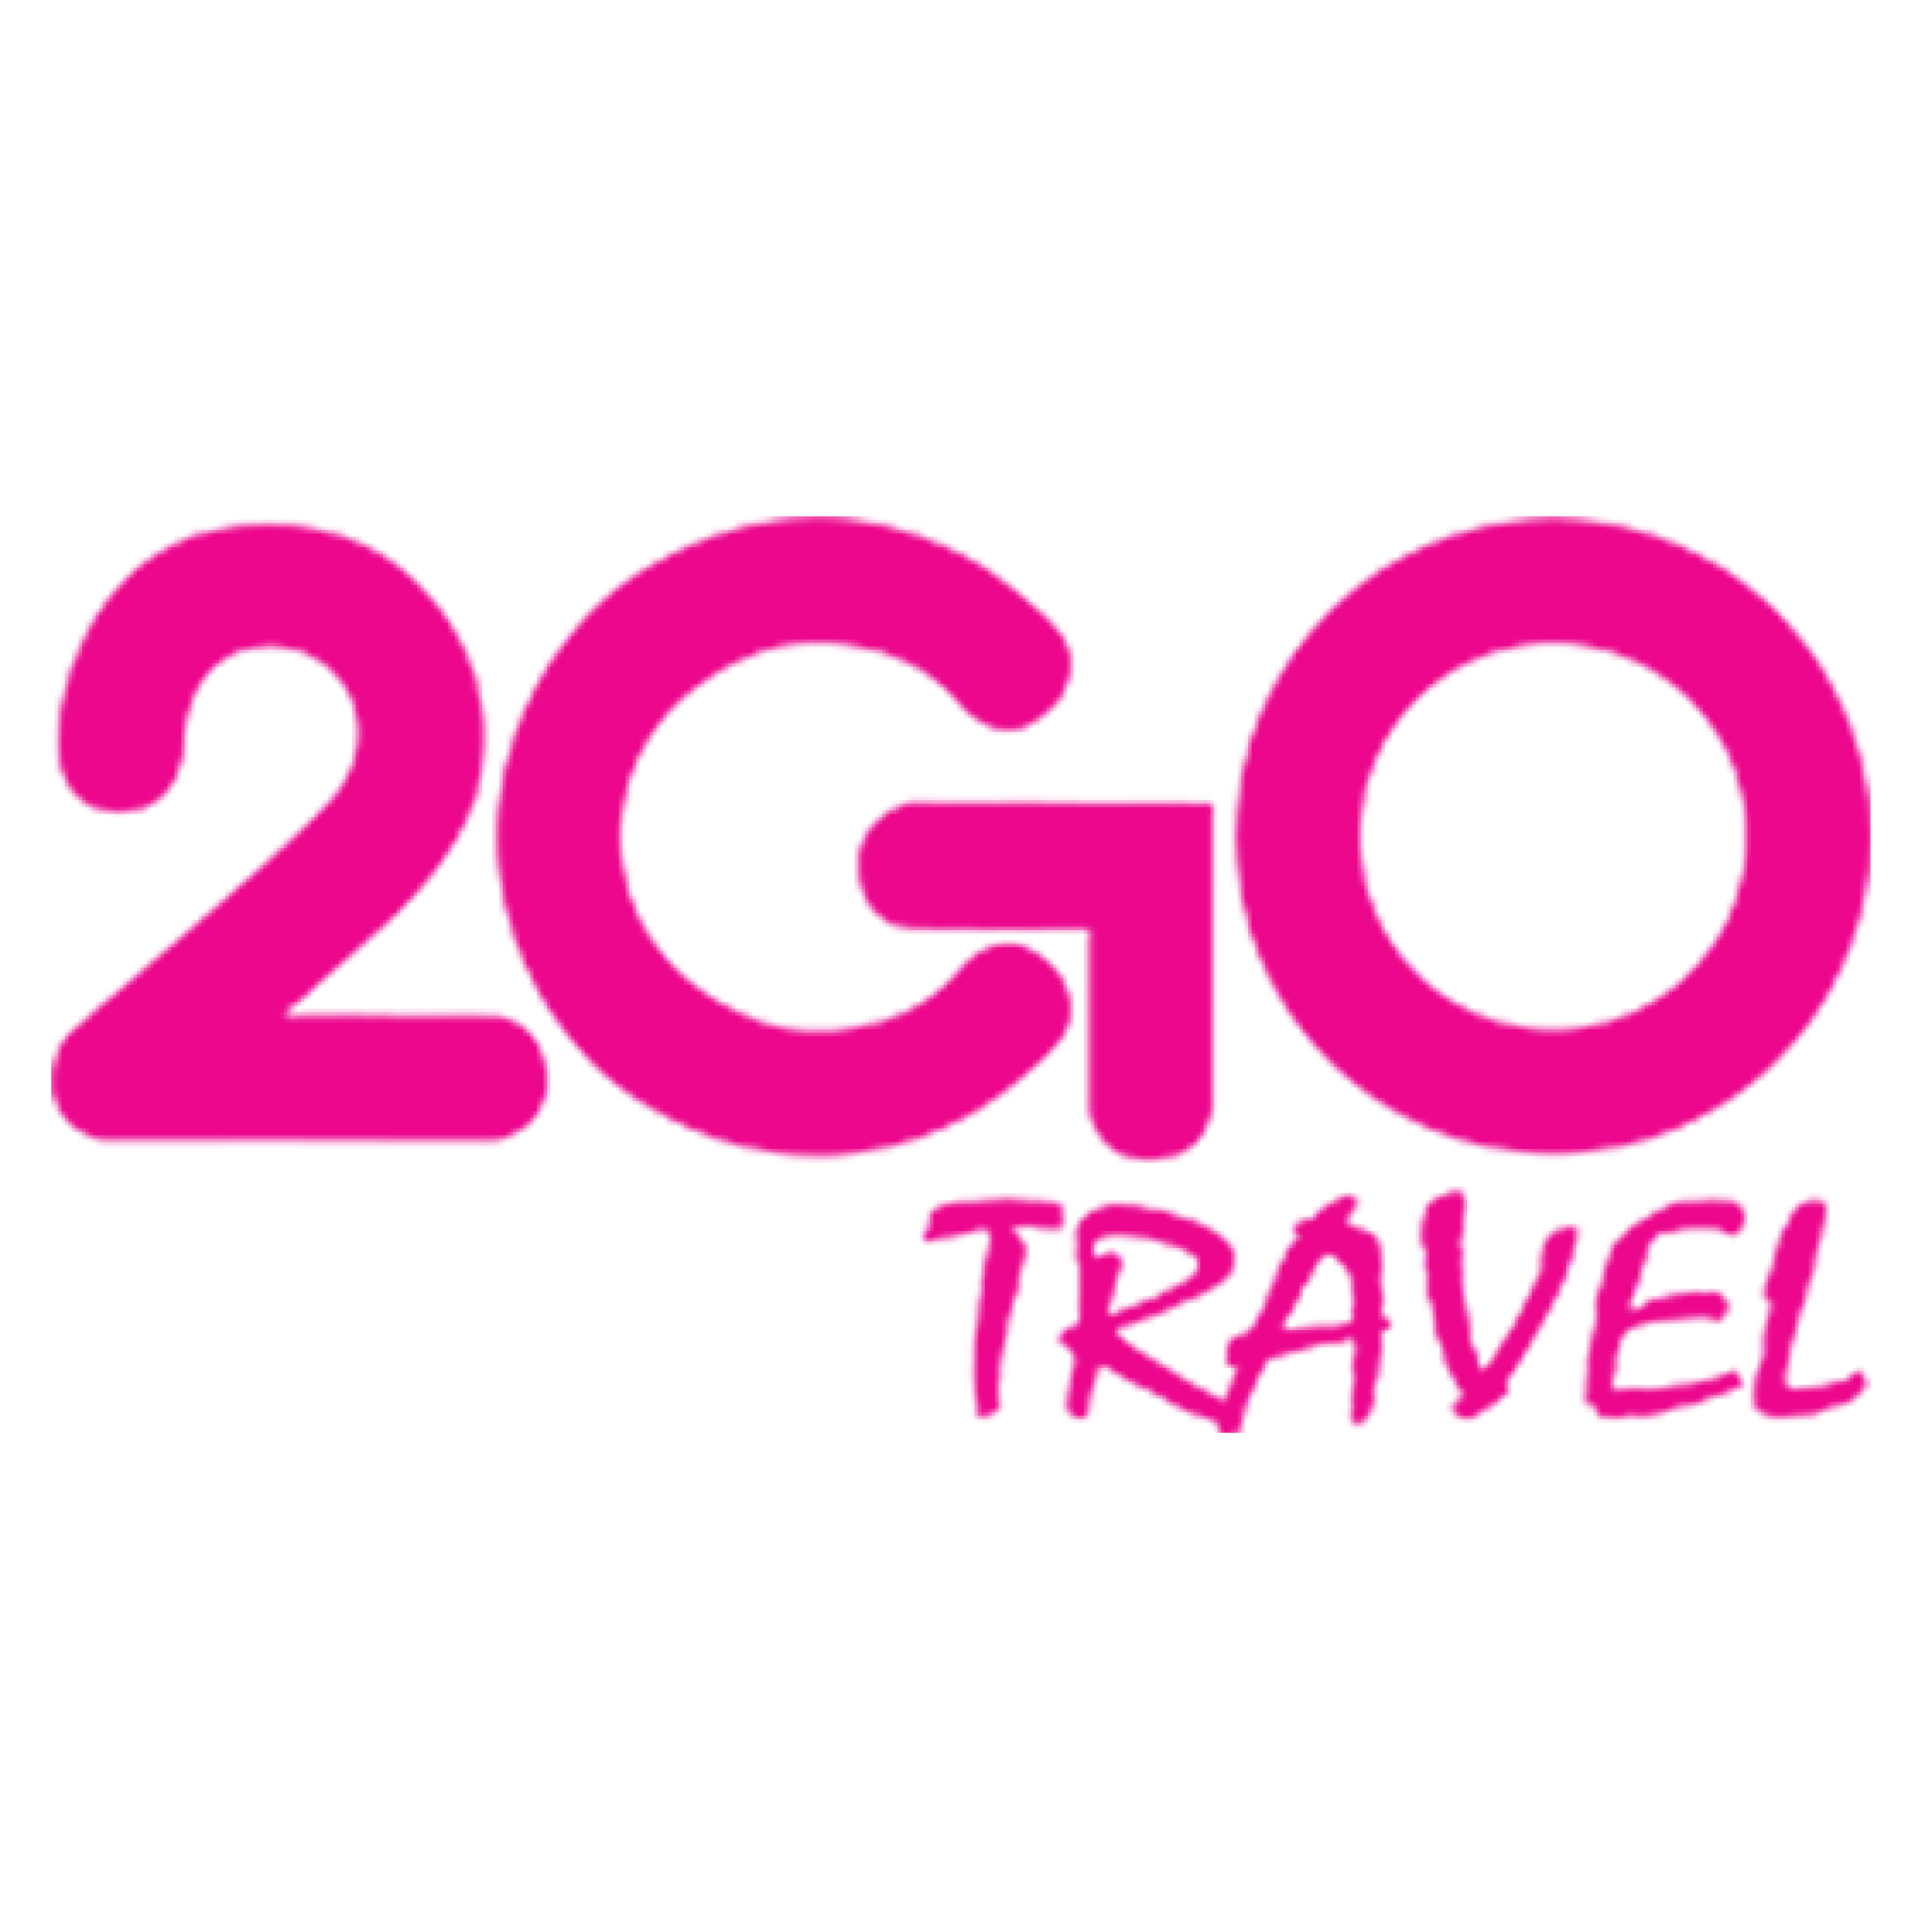 2go travel email address